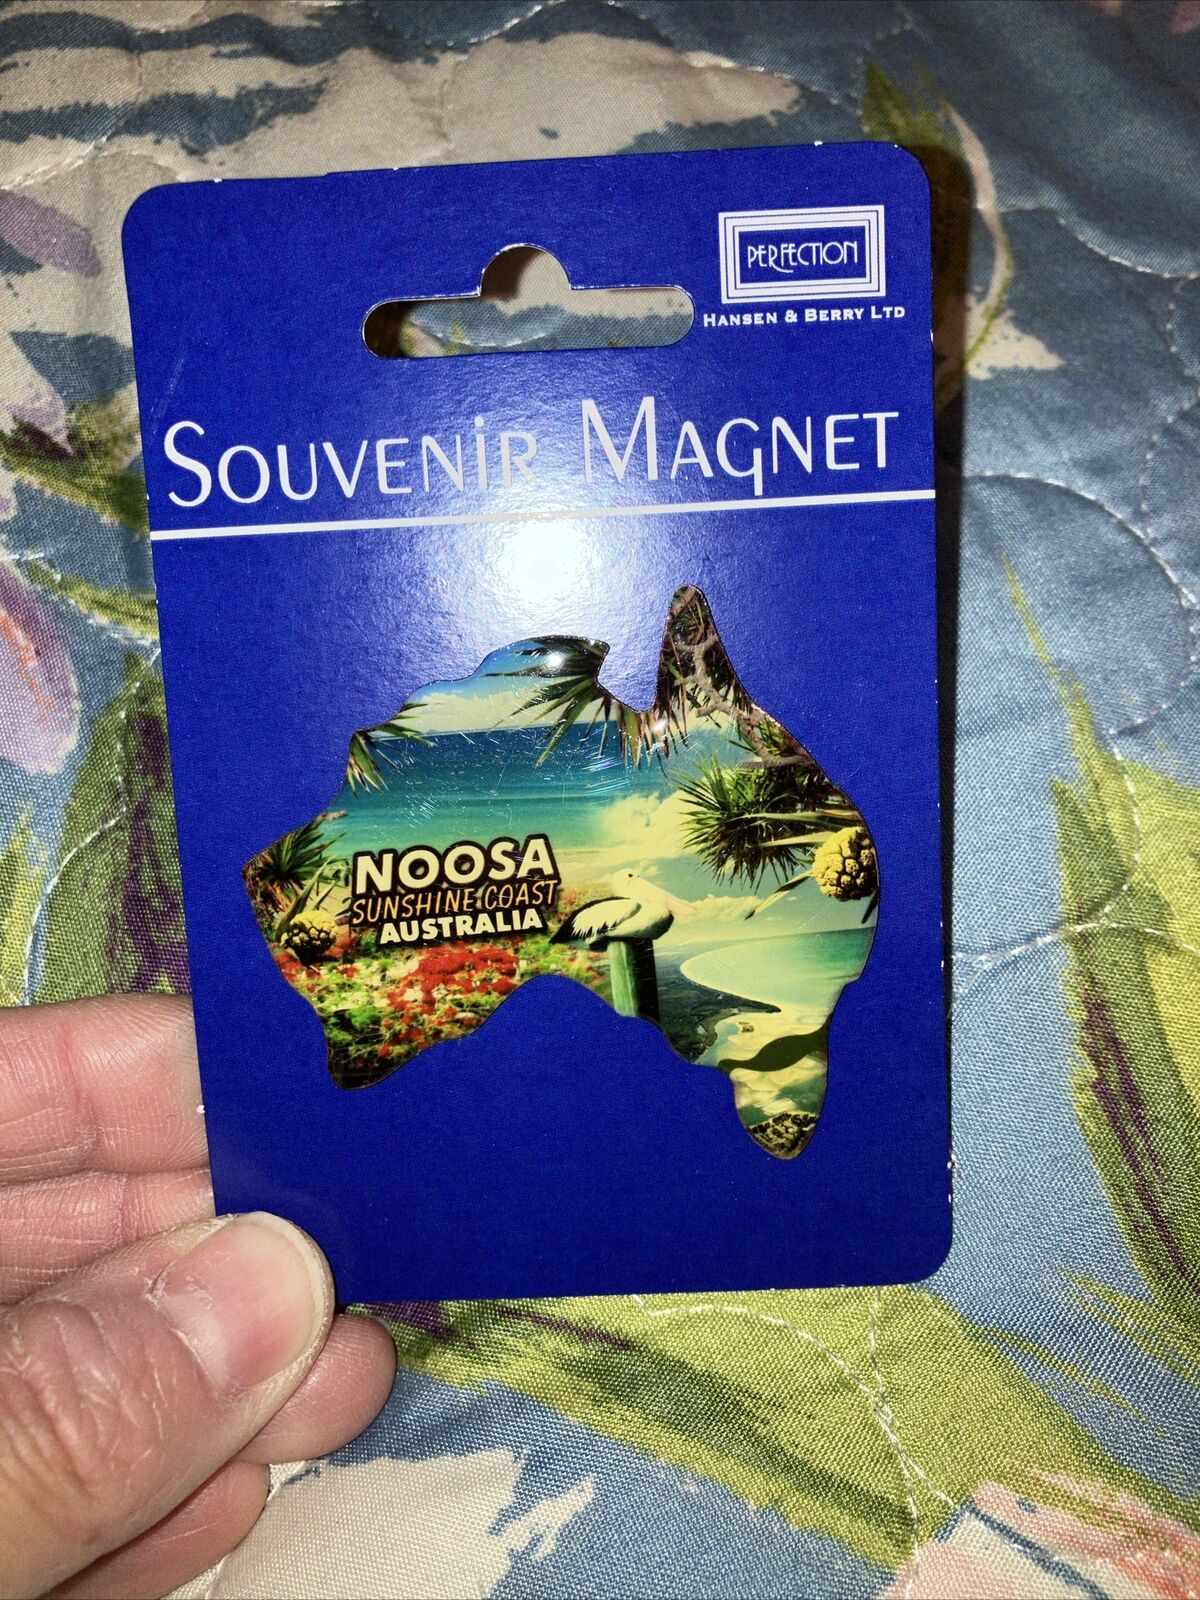 Australia Noosa Sunshine Coast Refrigerator Magnet By Hansen & Berry New